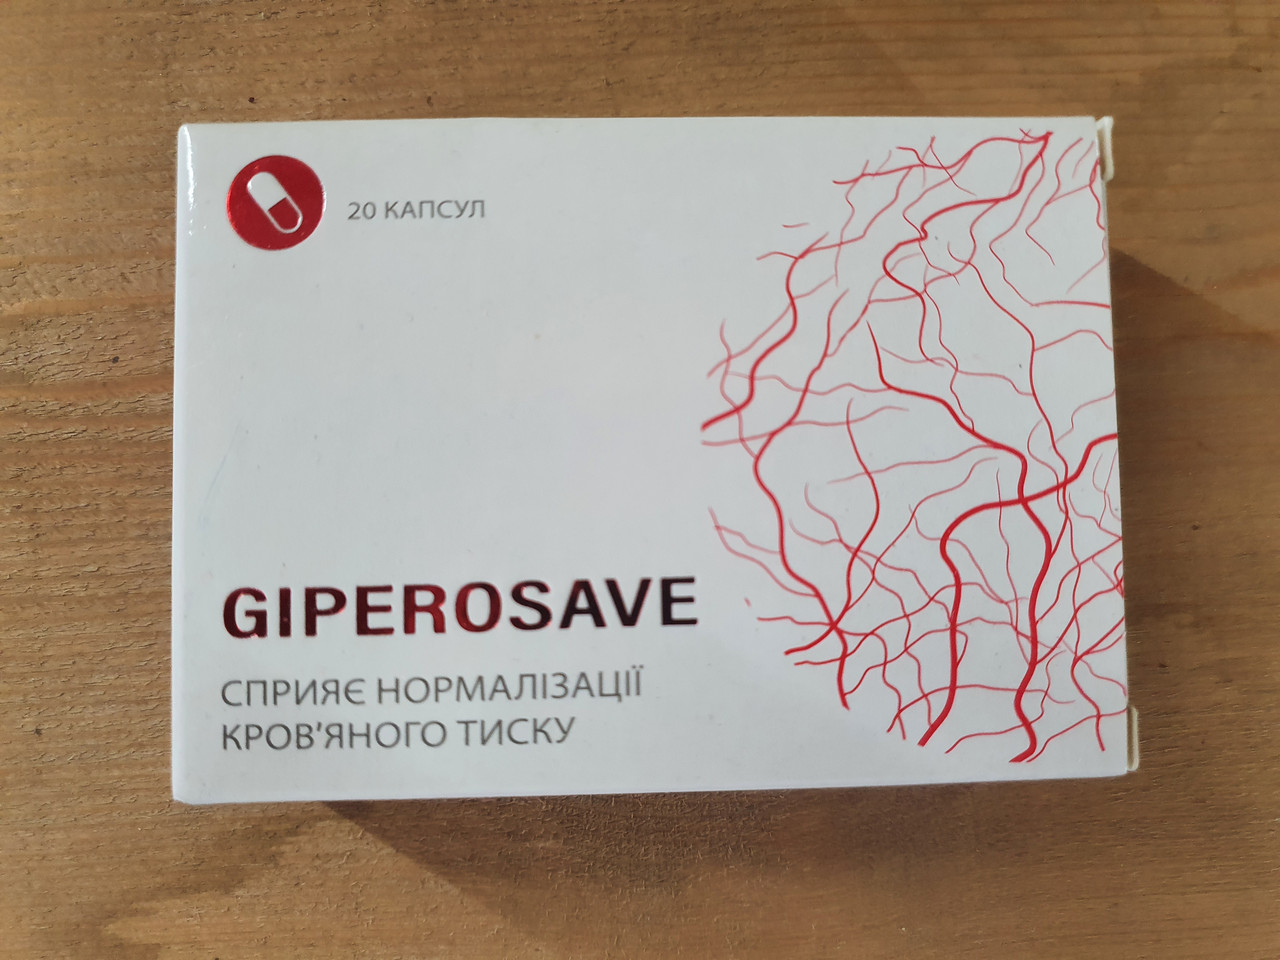 

GiperoSave от гипертонии гиперосейф